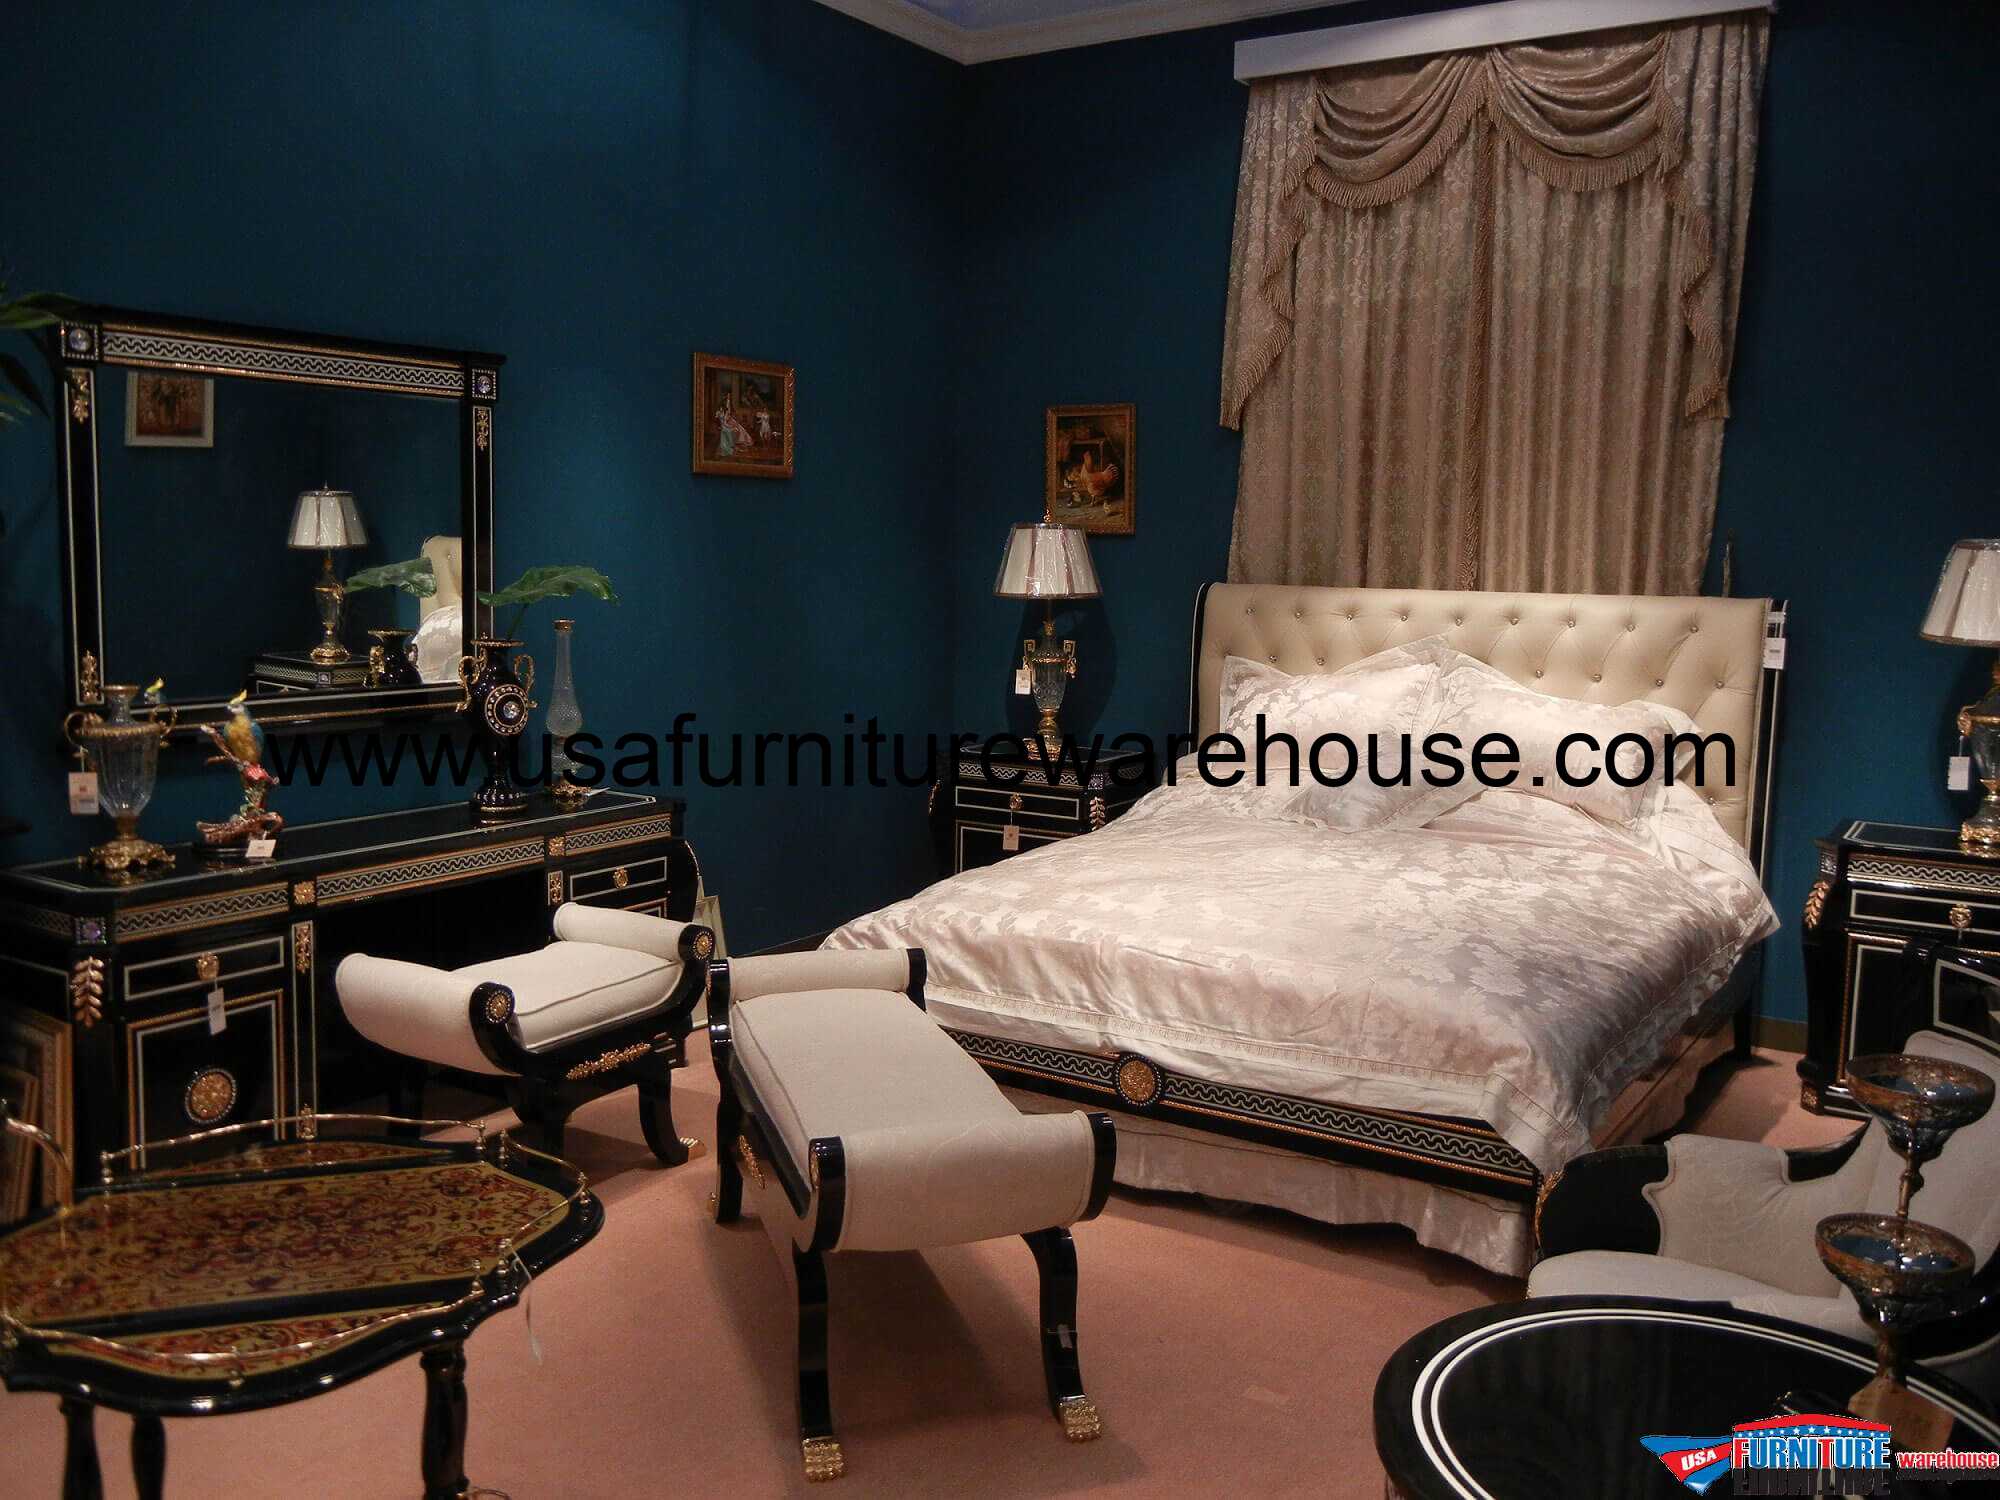 Swarovski Luxury Italian King Bedroom Suite - USA Furniture Warehouse